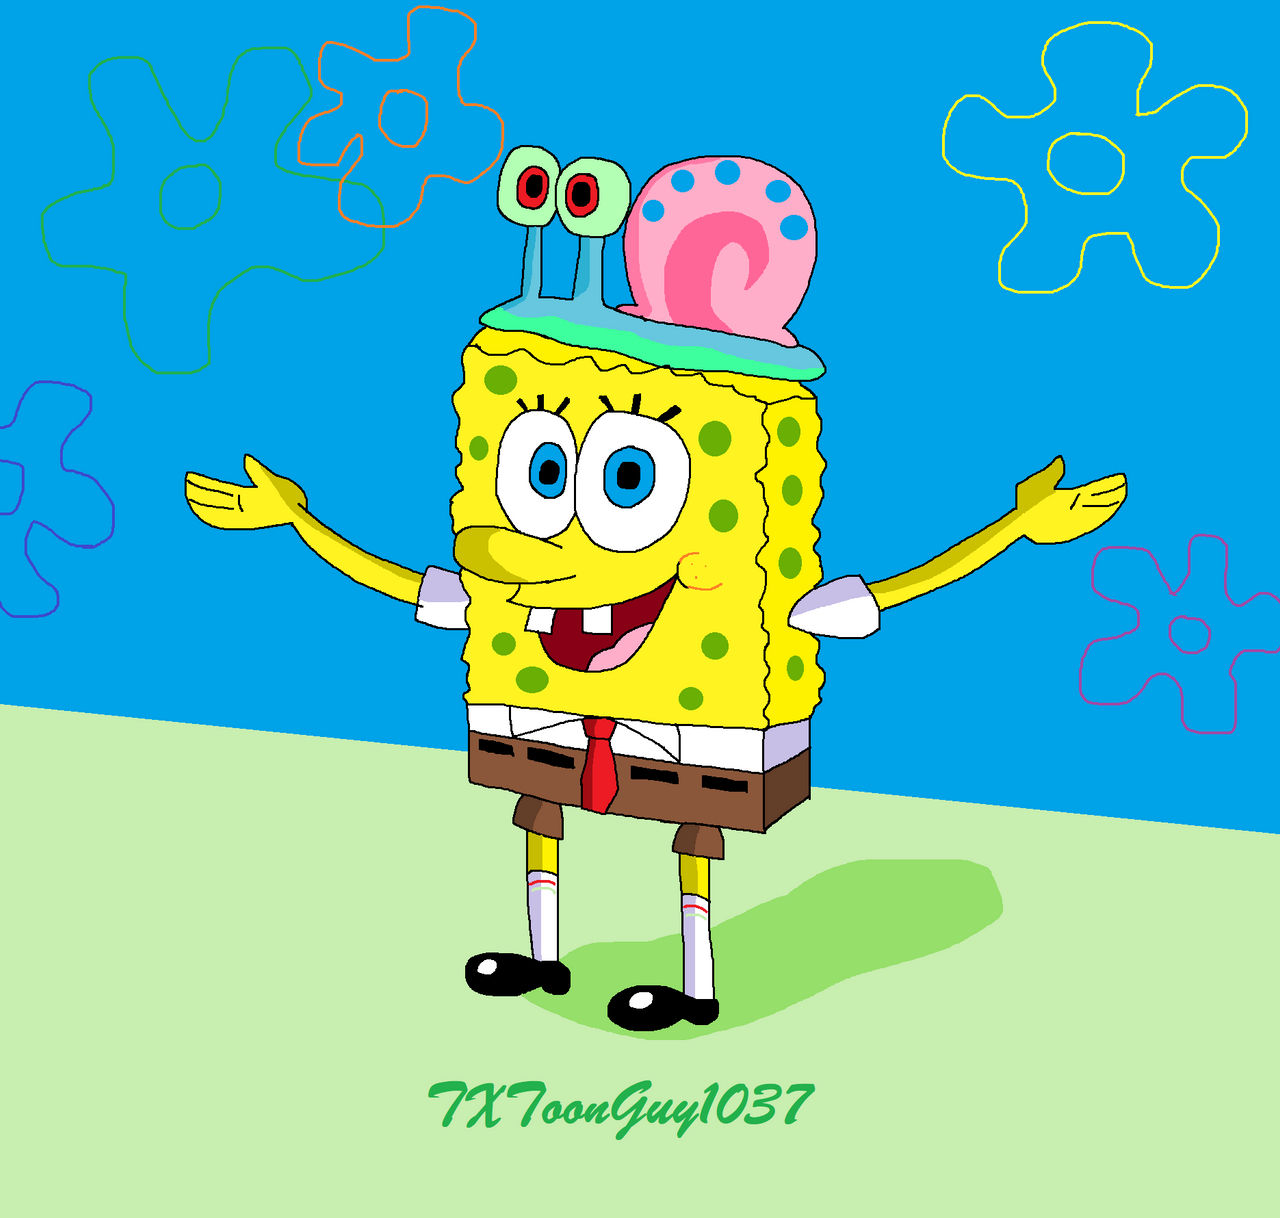 SpongeBob SquarePants - SpongeBob and Gary by TXToonGuy1037 on DeviantArt